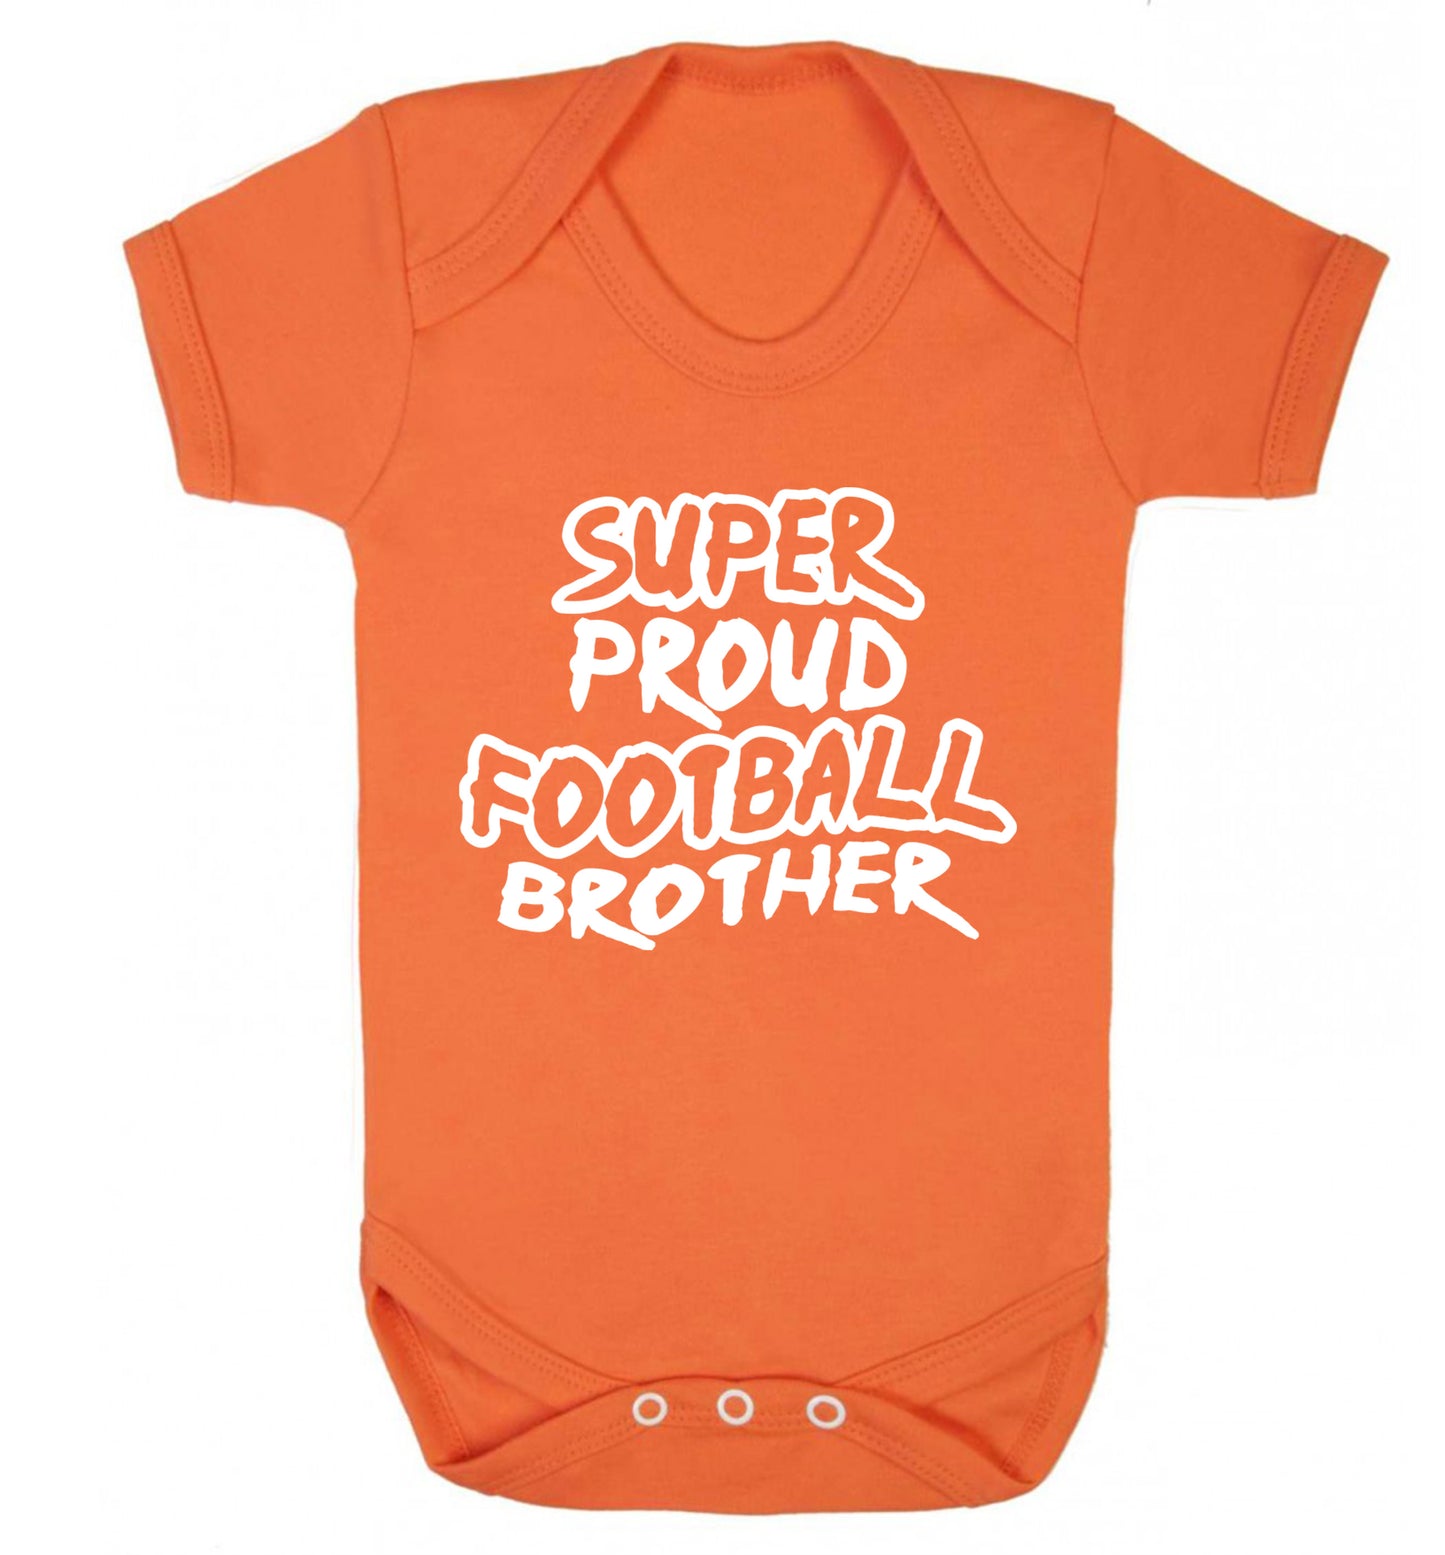 Super proud football brother Baby Vest orange 18-24 months